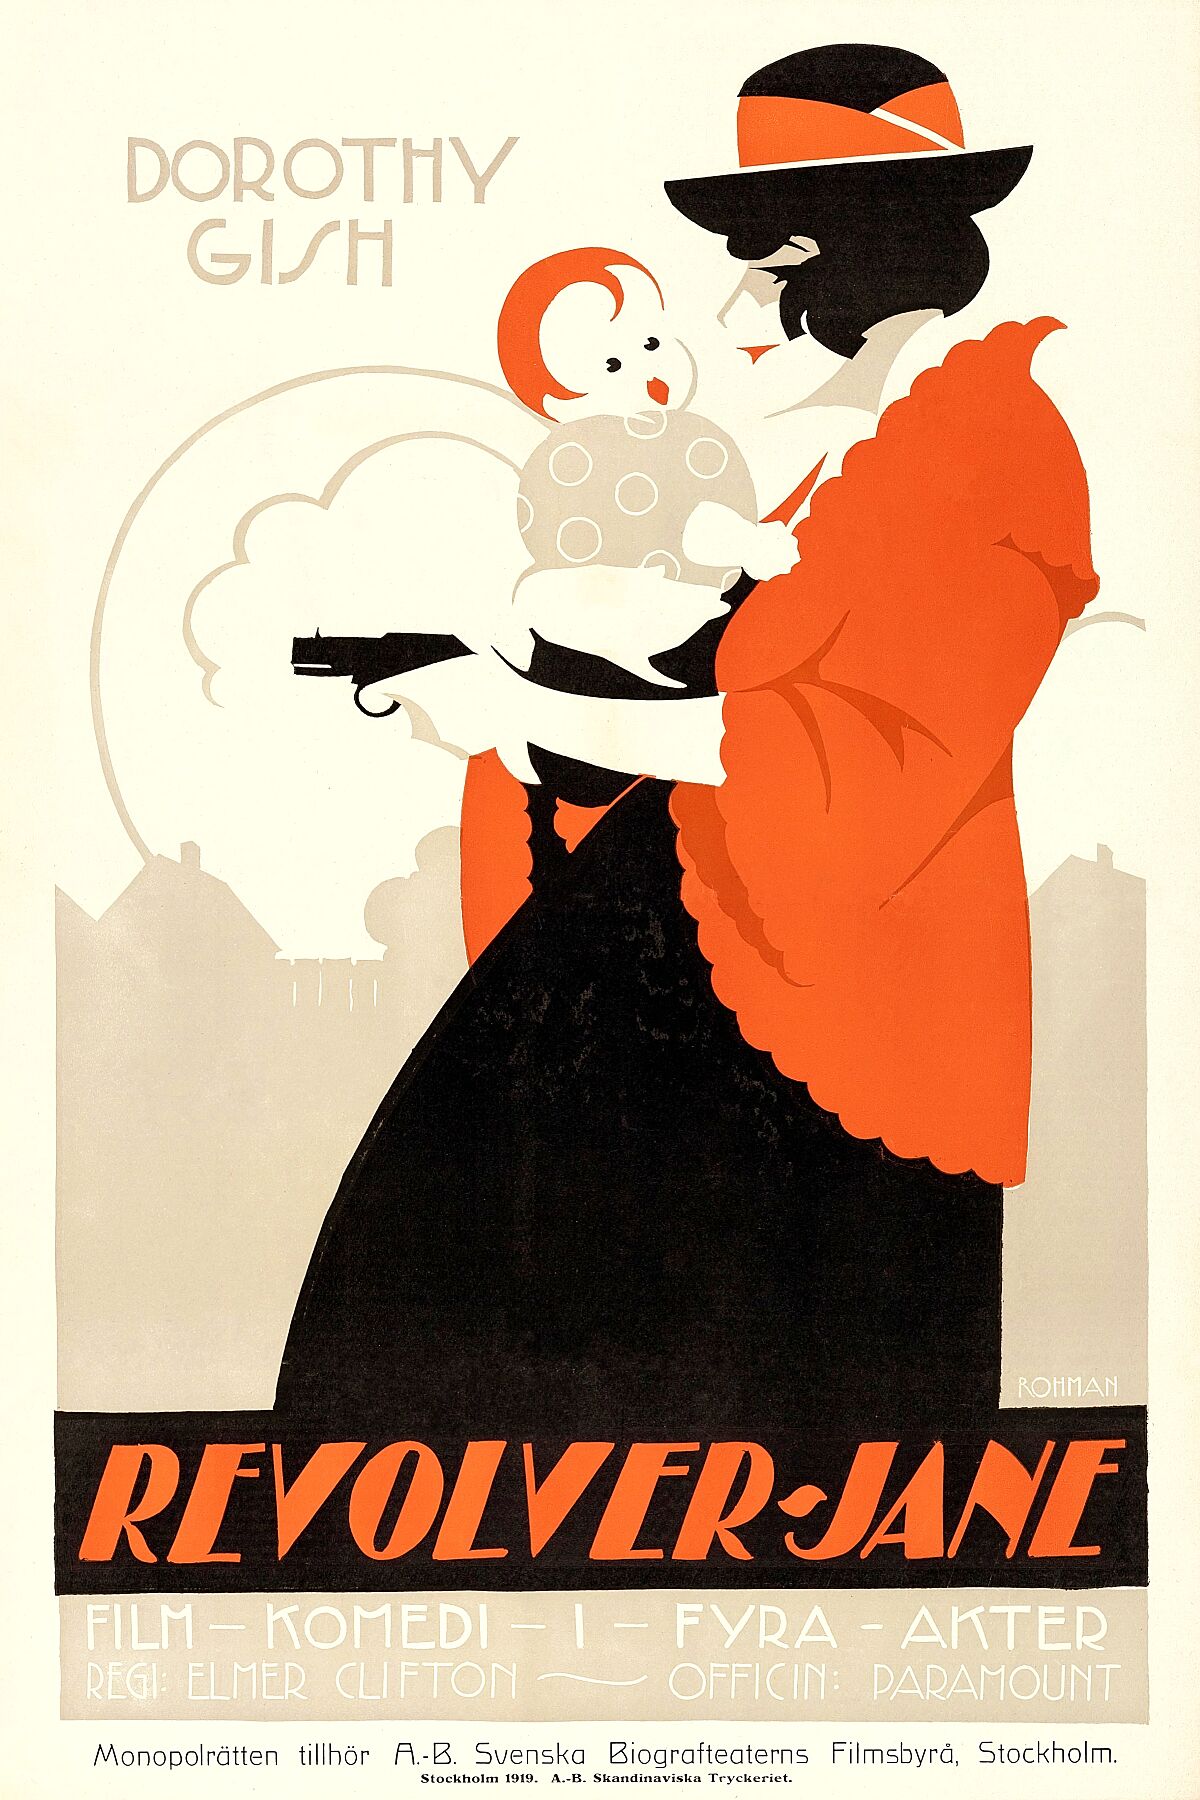 Battling Jane (or Revolver Jane) starring Dorothy Gish - 1918 poster by Eric Rohman